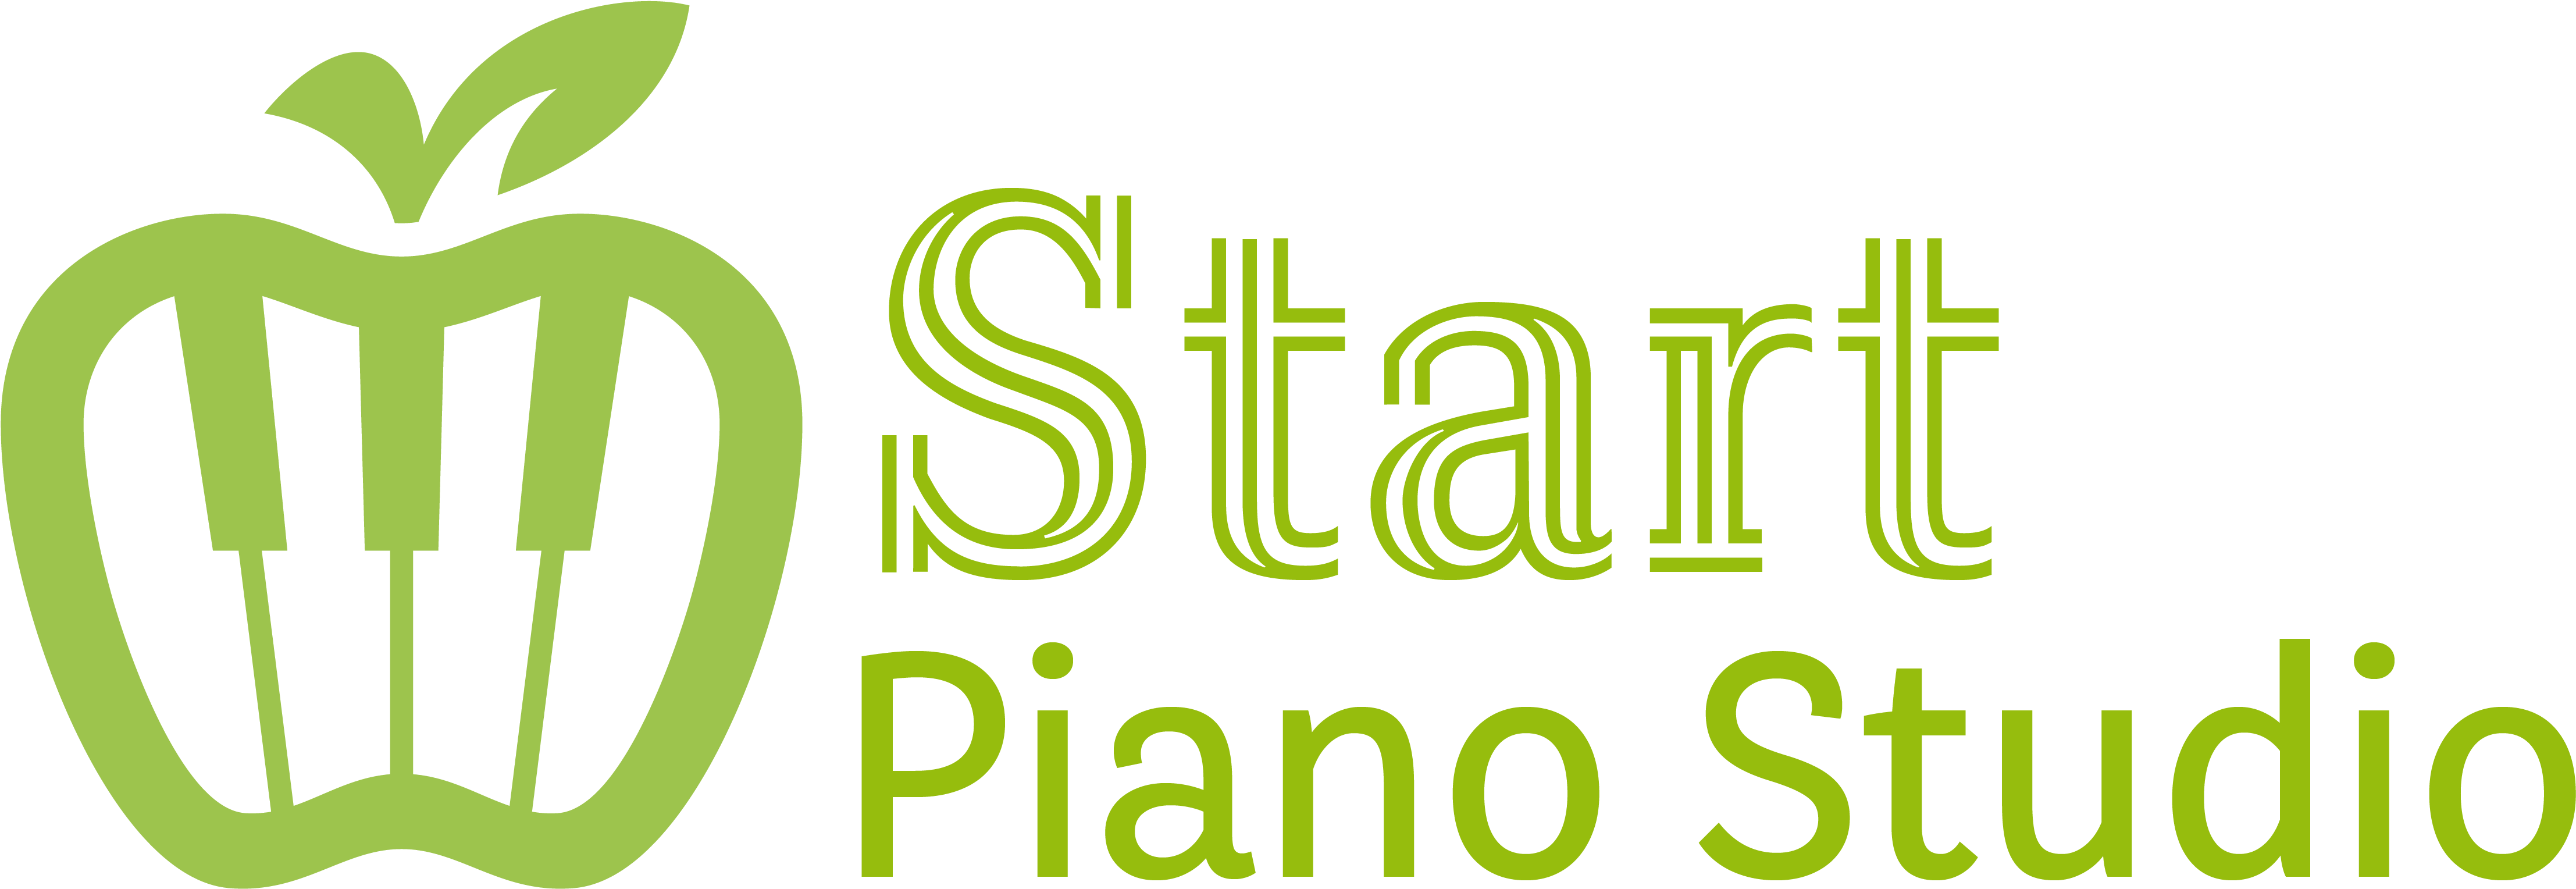 Start Piano Studio - Calligraphy (5000x1840), Png Download